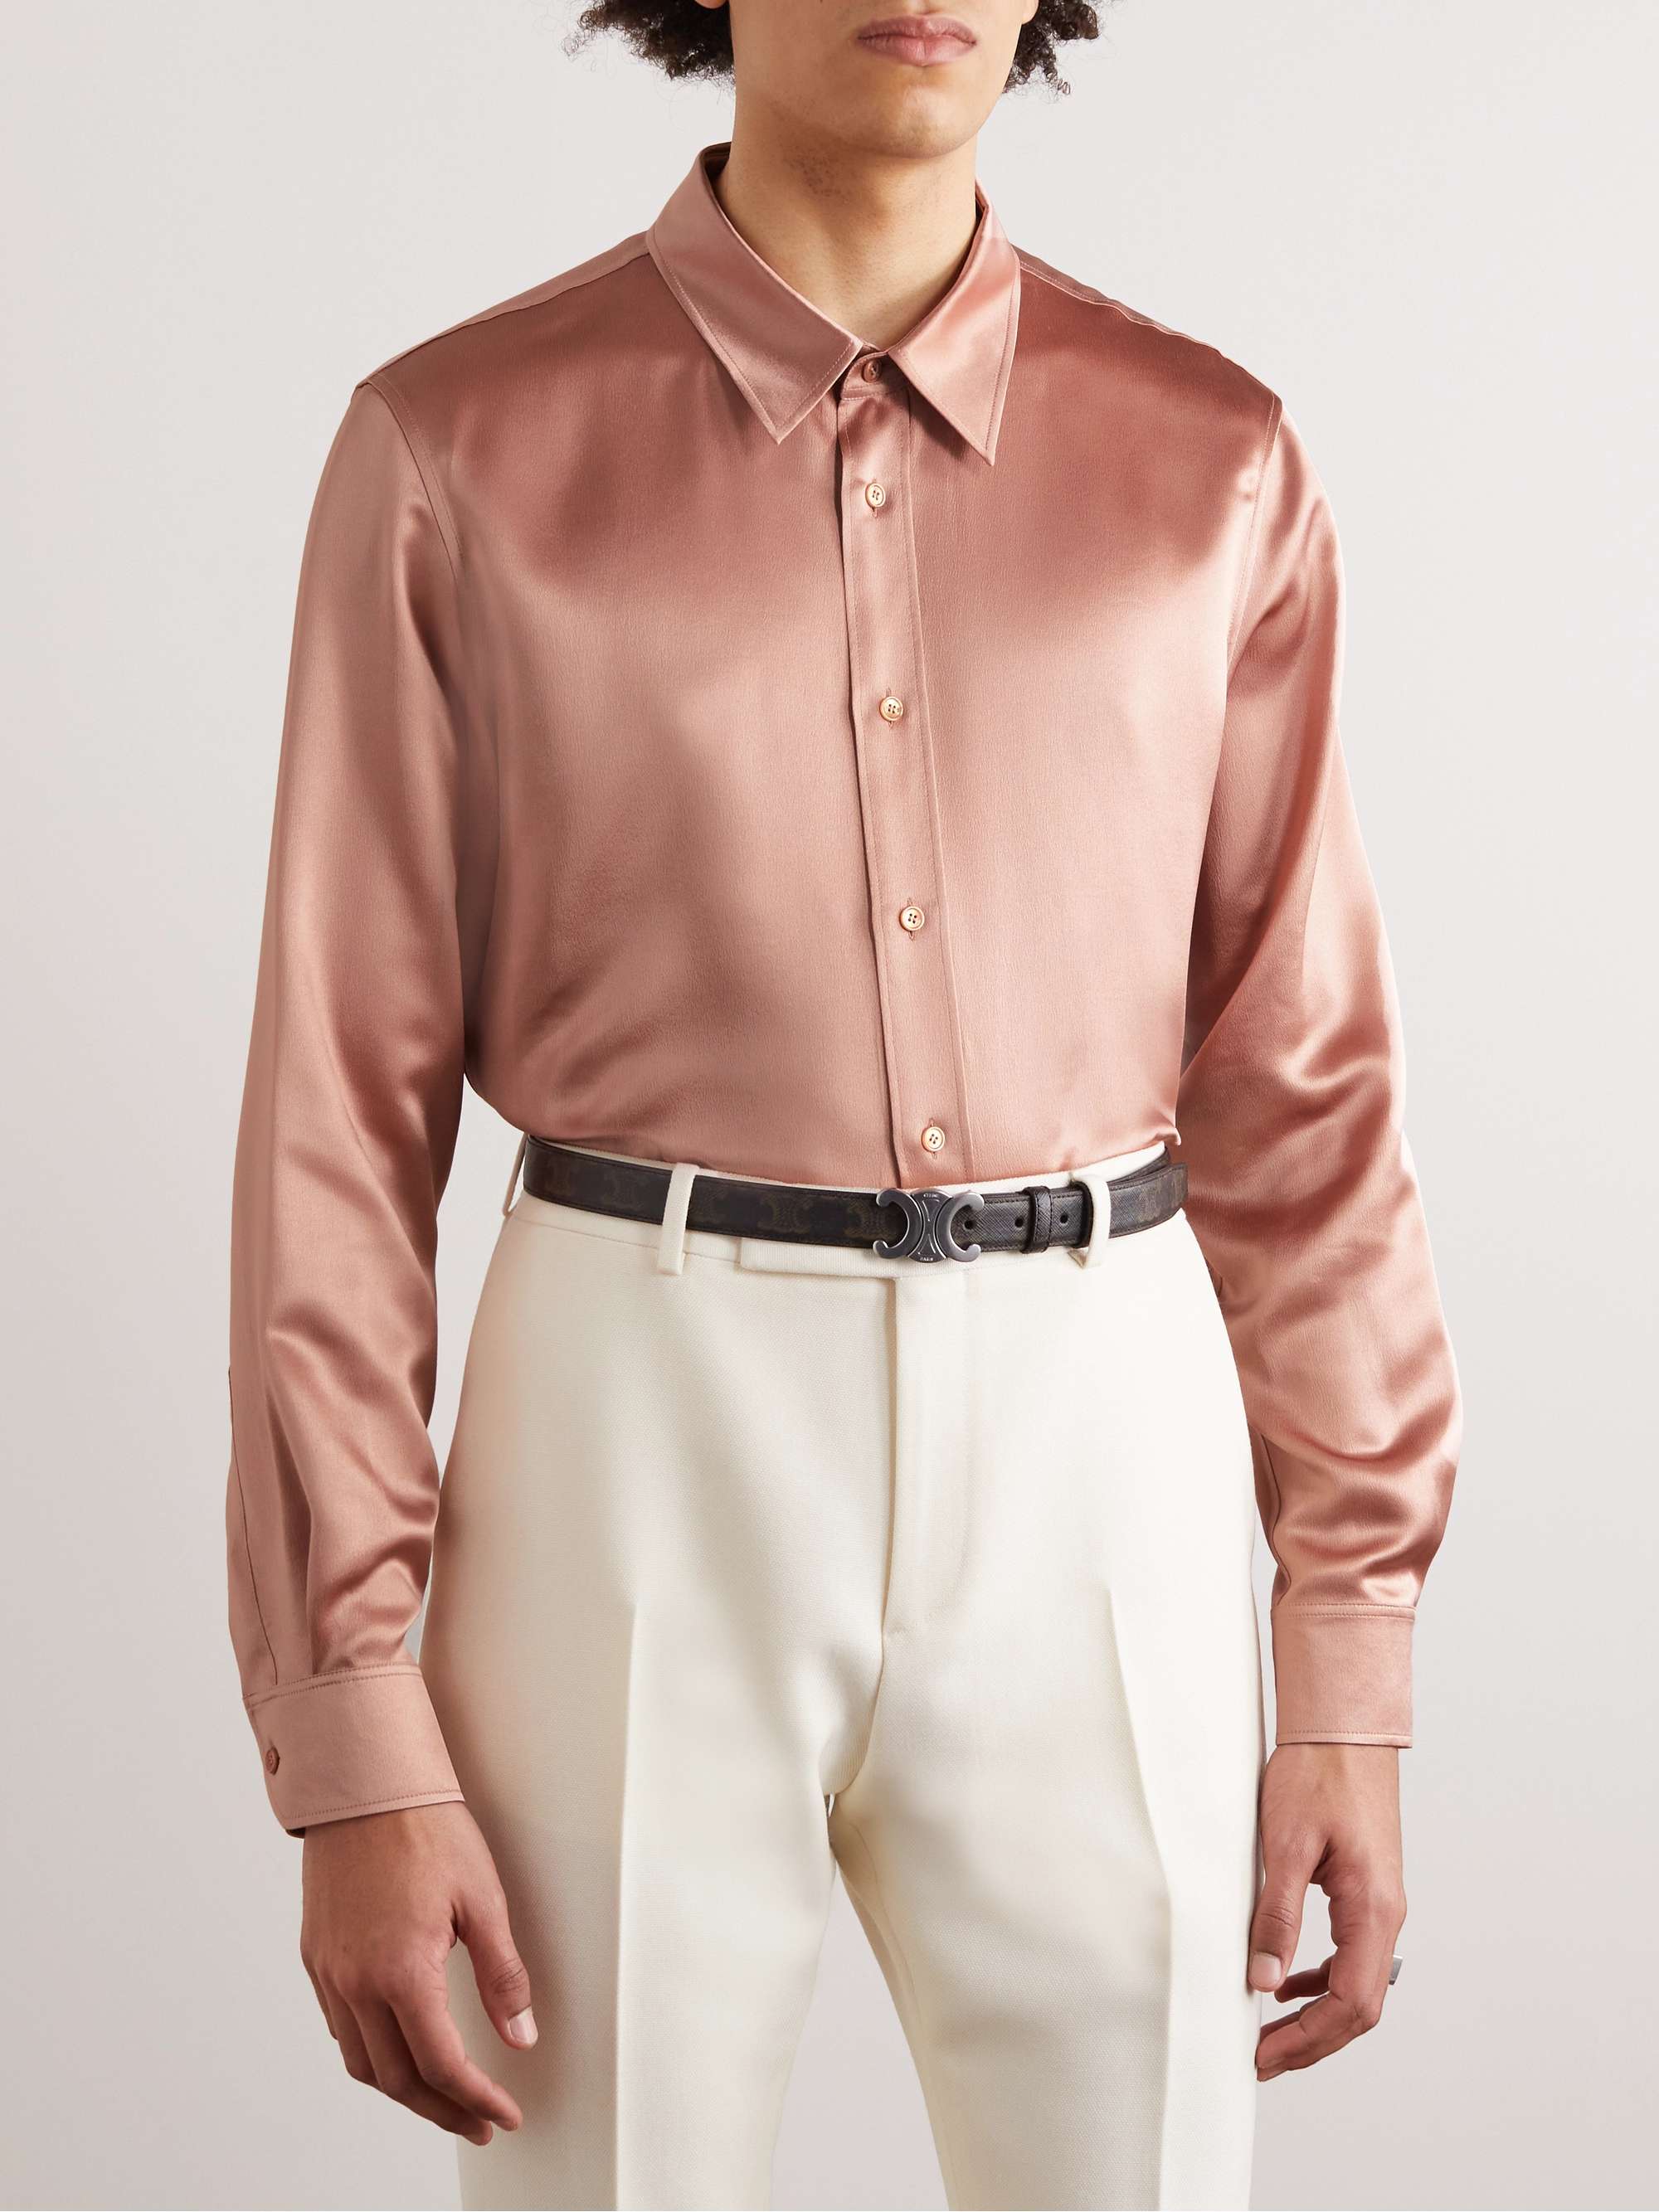 CELINE HOMME Silk-Satin Shirt